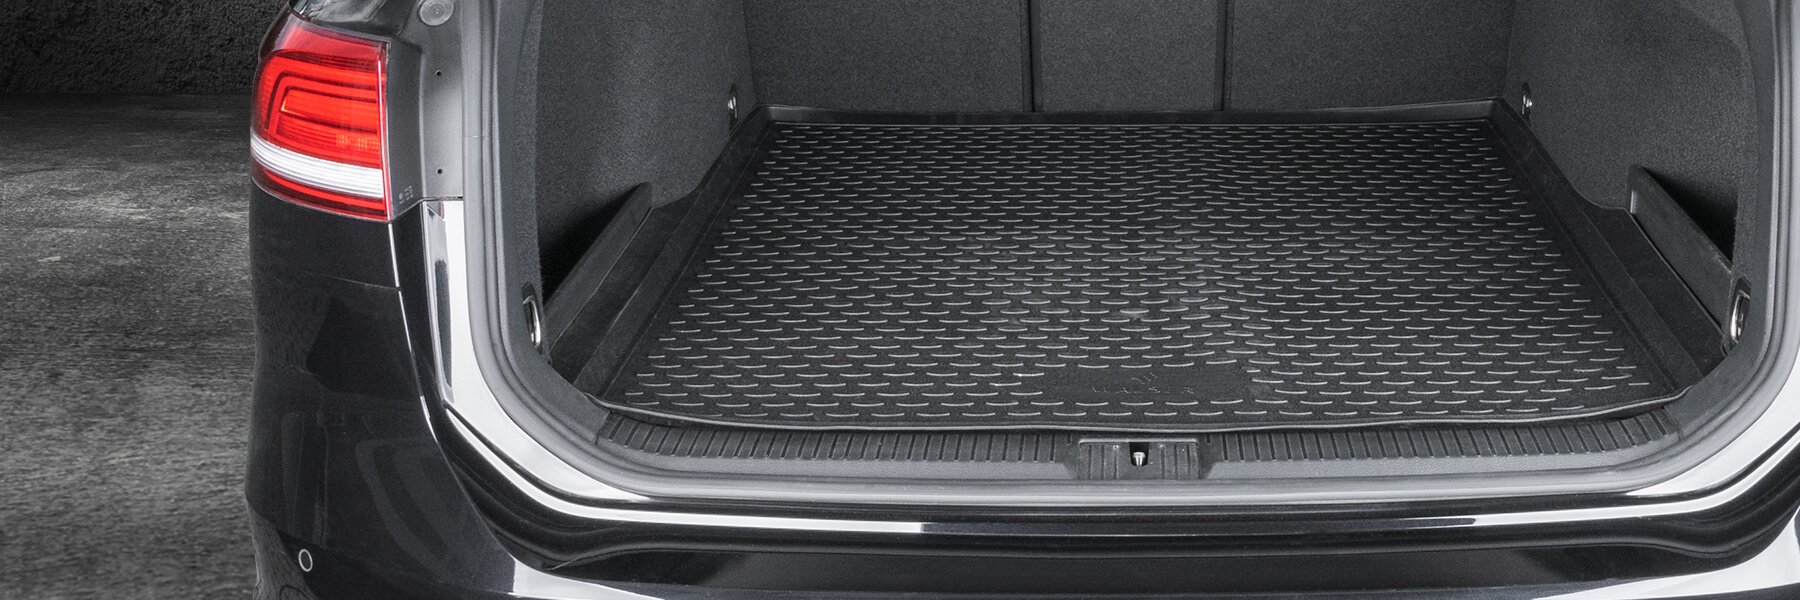 ab 2015 EXKLUSIV Kofferraumwanne Kofferraummatte VW Touran III obere Etage Bj